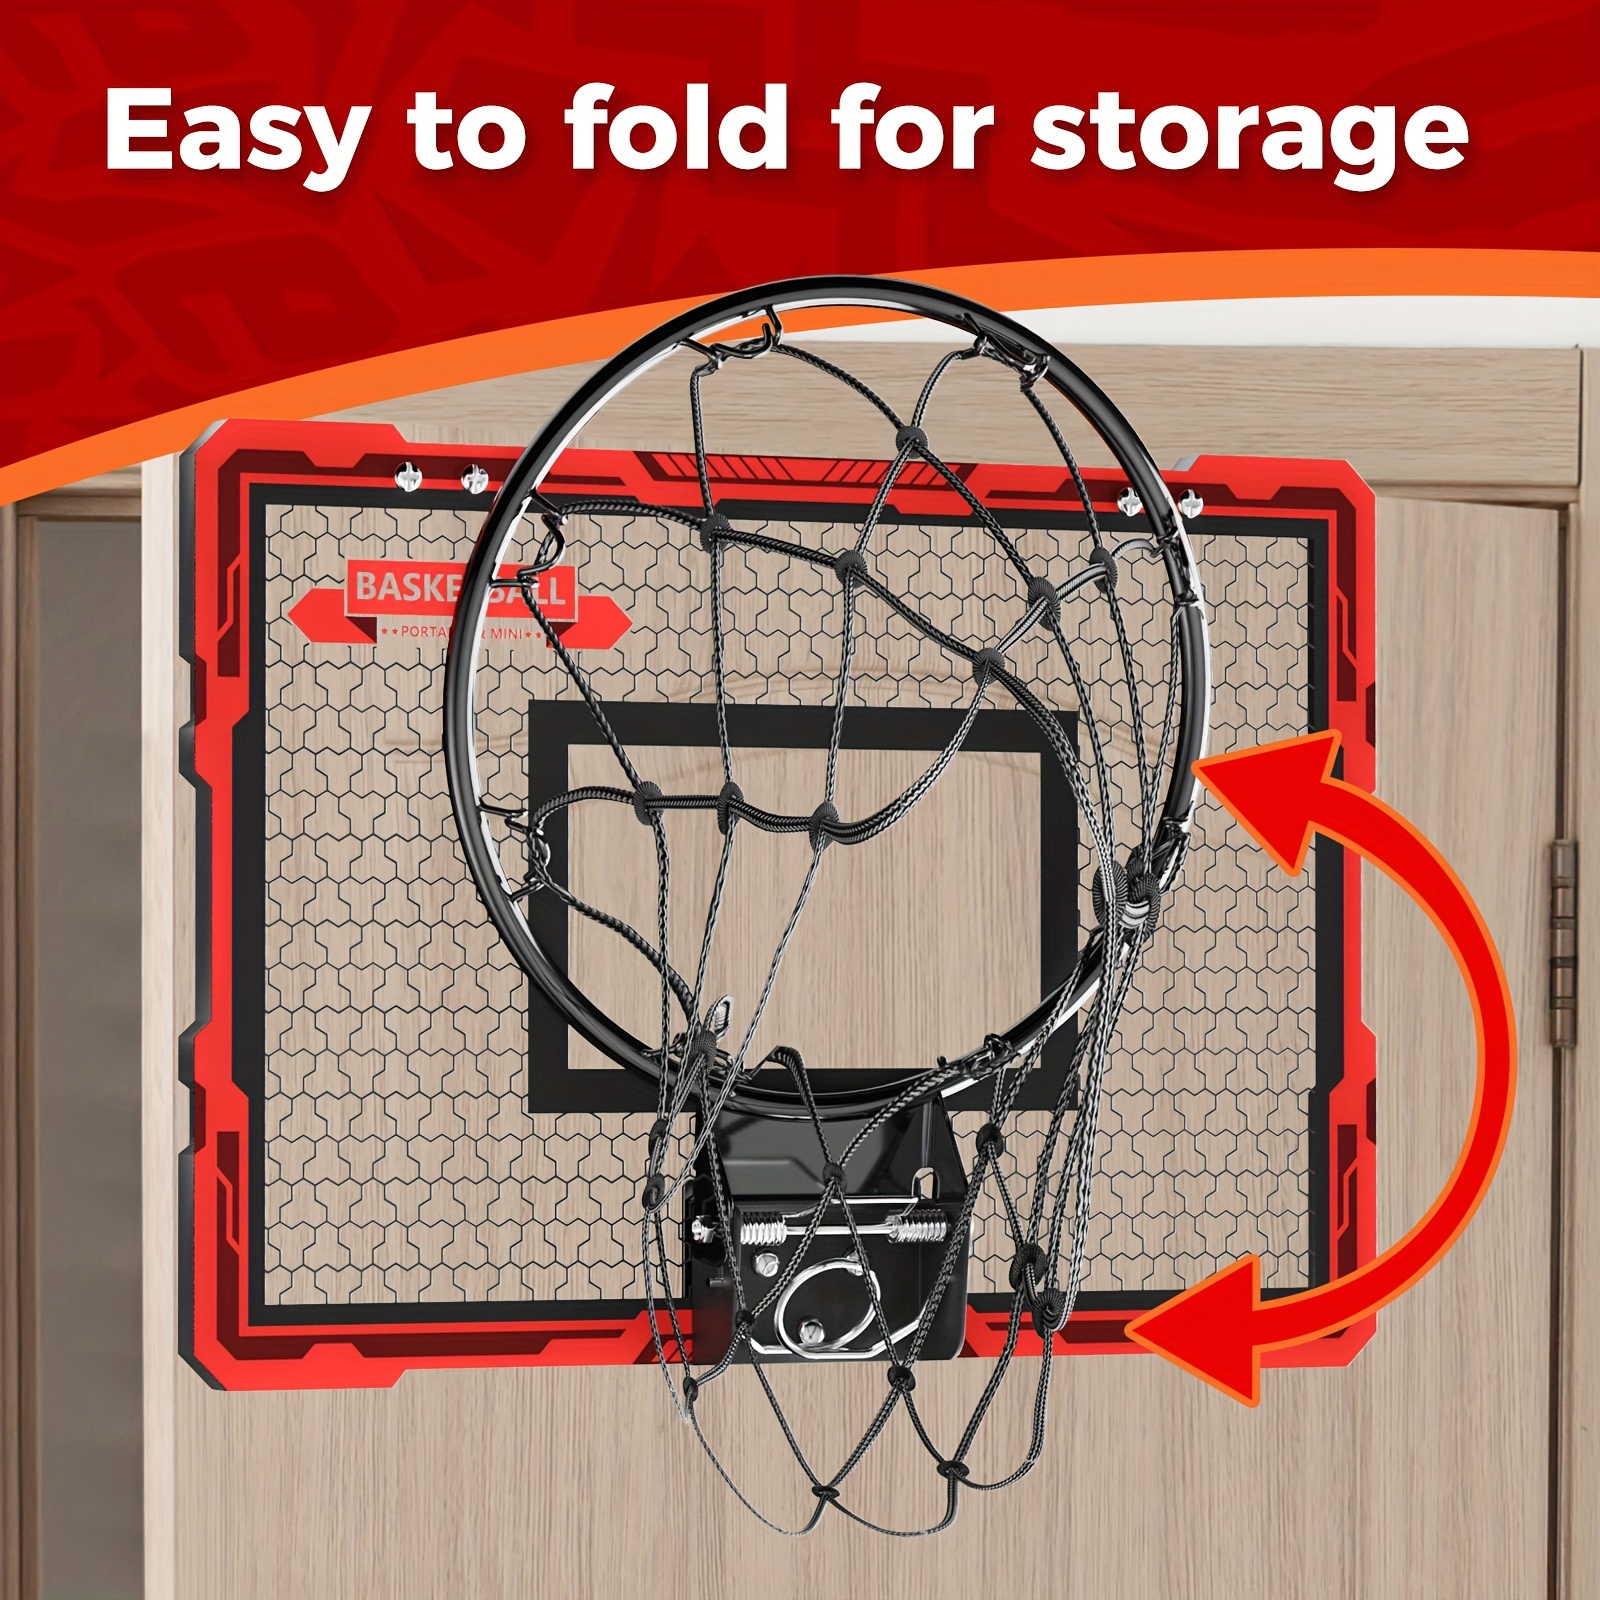 mini basketball hoop for bedroom